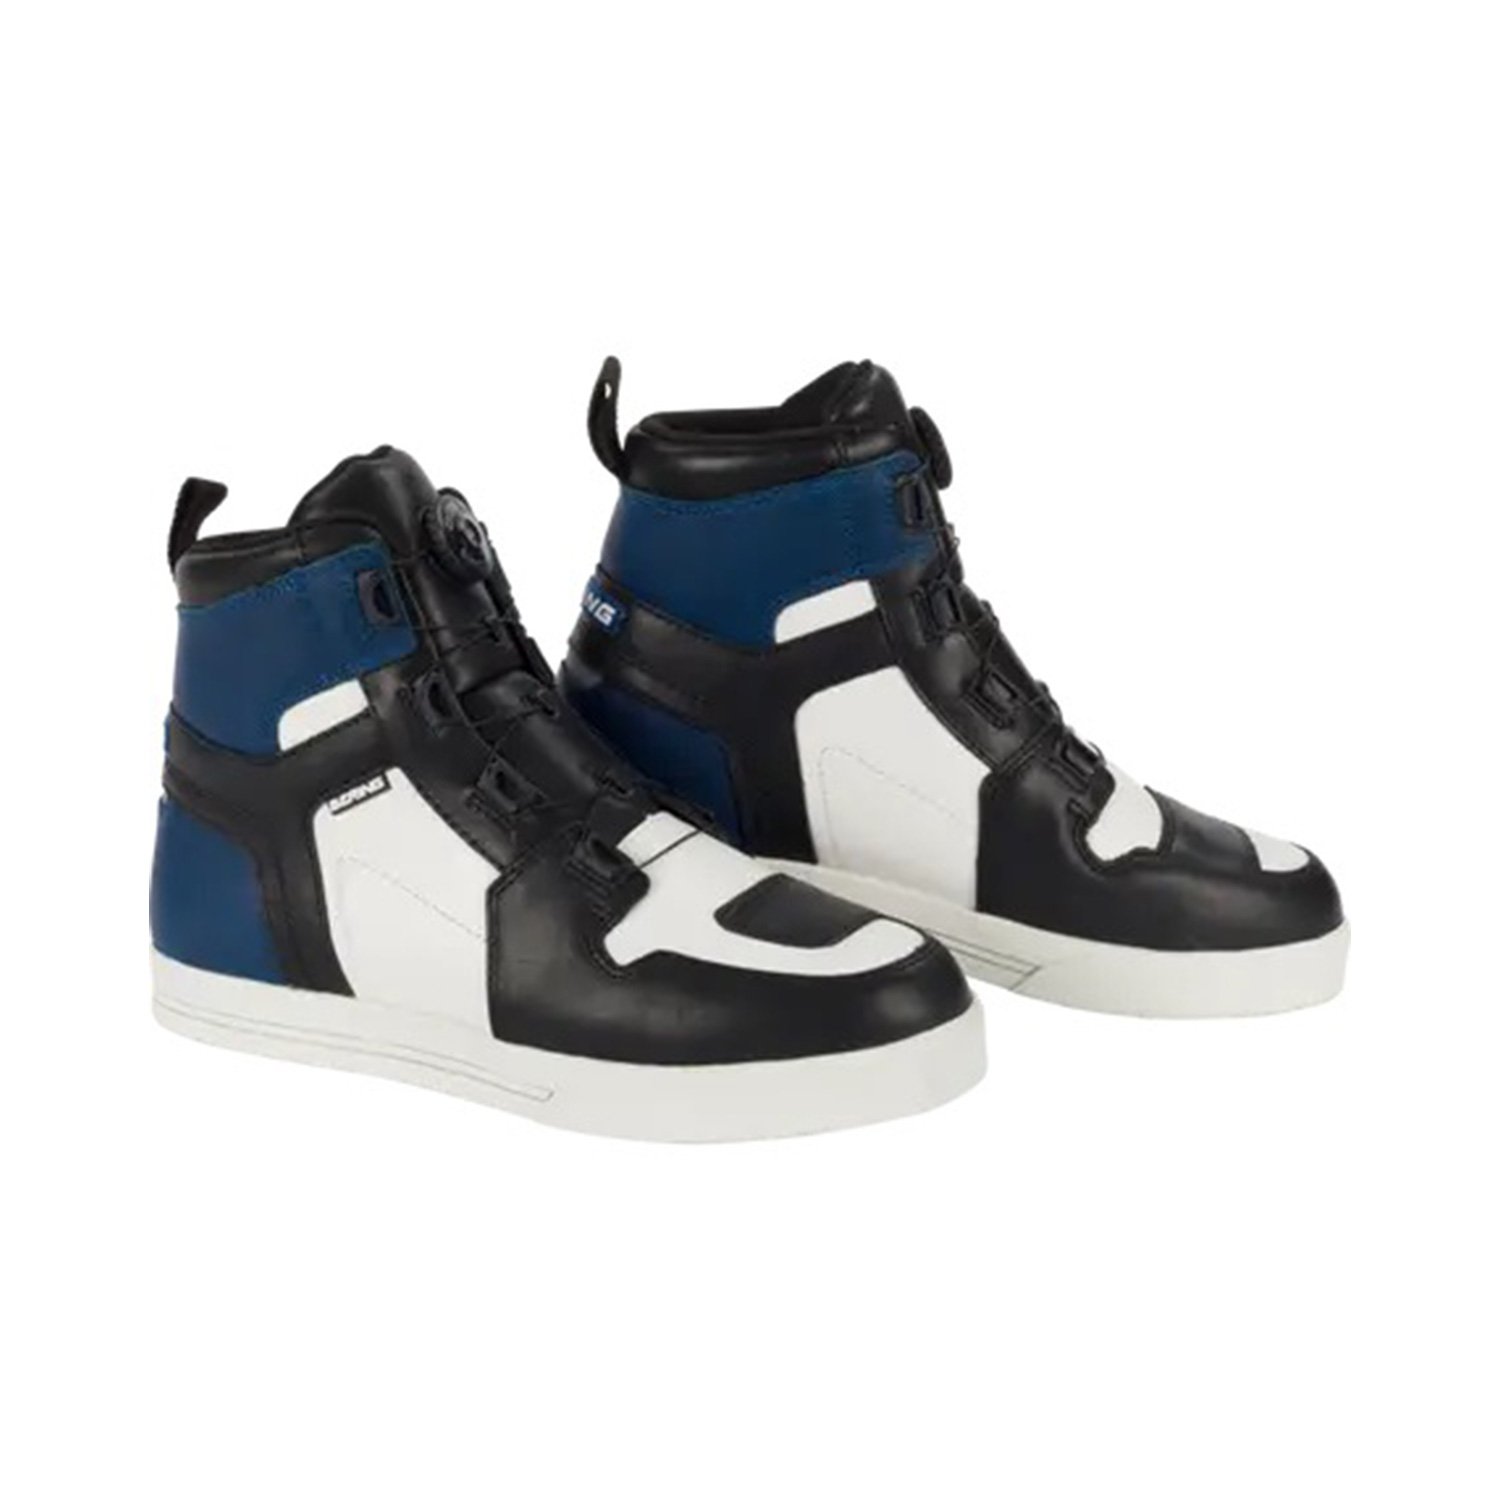 Image of Bering Sneakers Reflex A-Top Black White Blue Size 44 EN